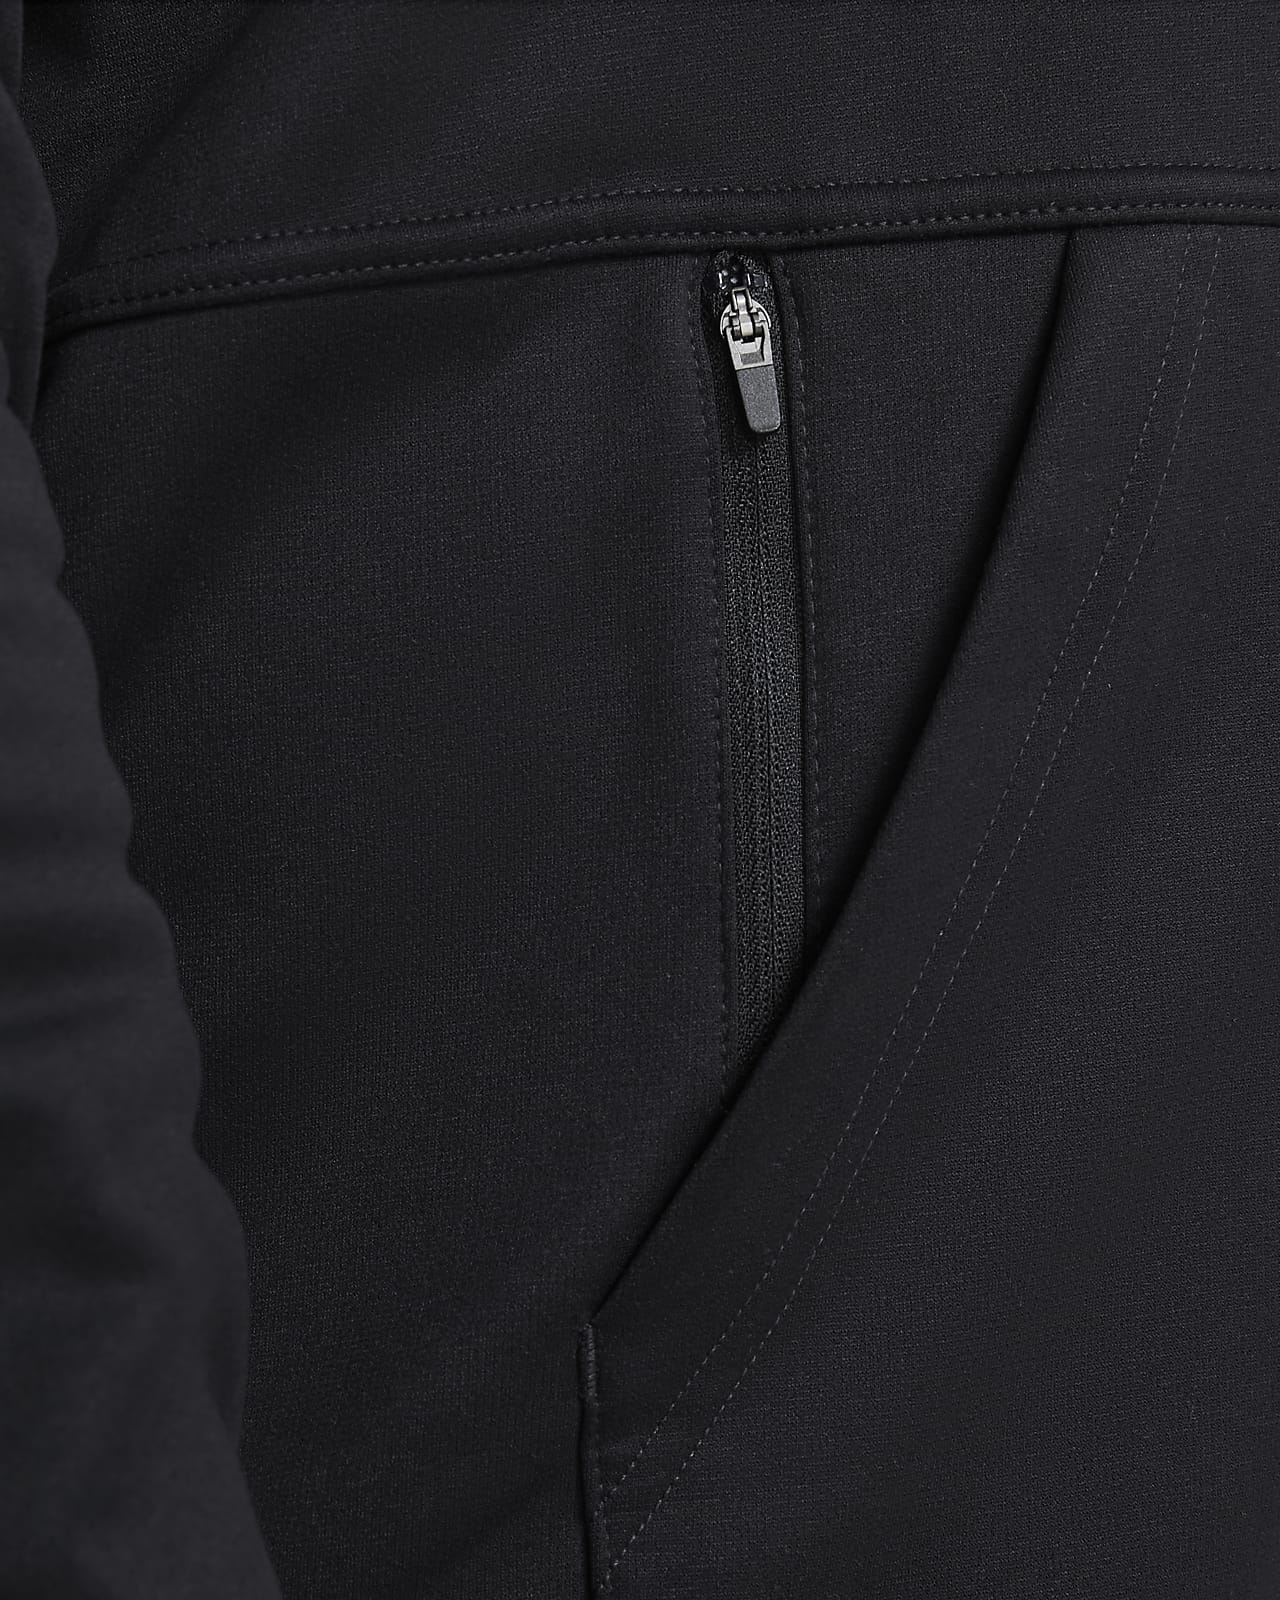 black nike sweater with zipper